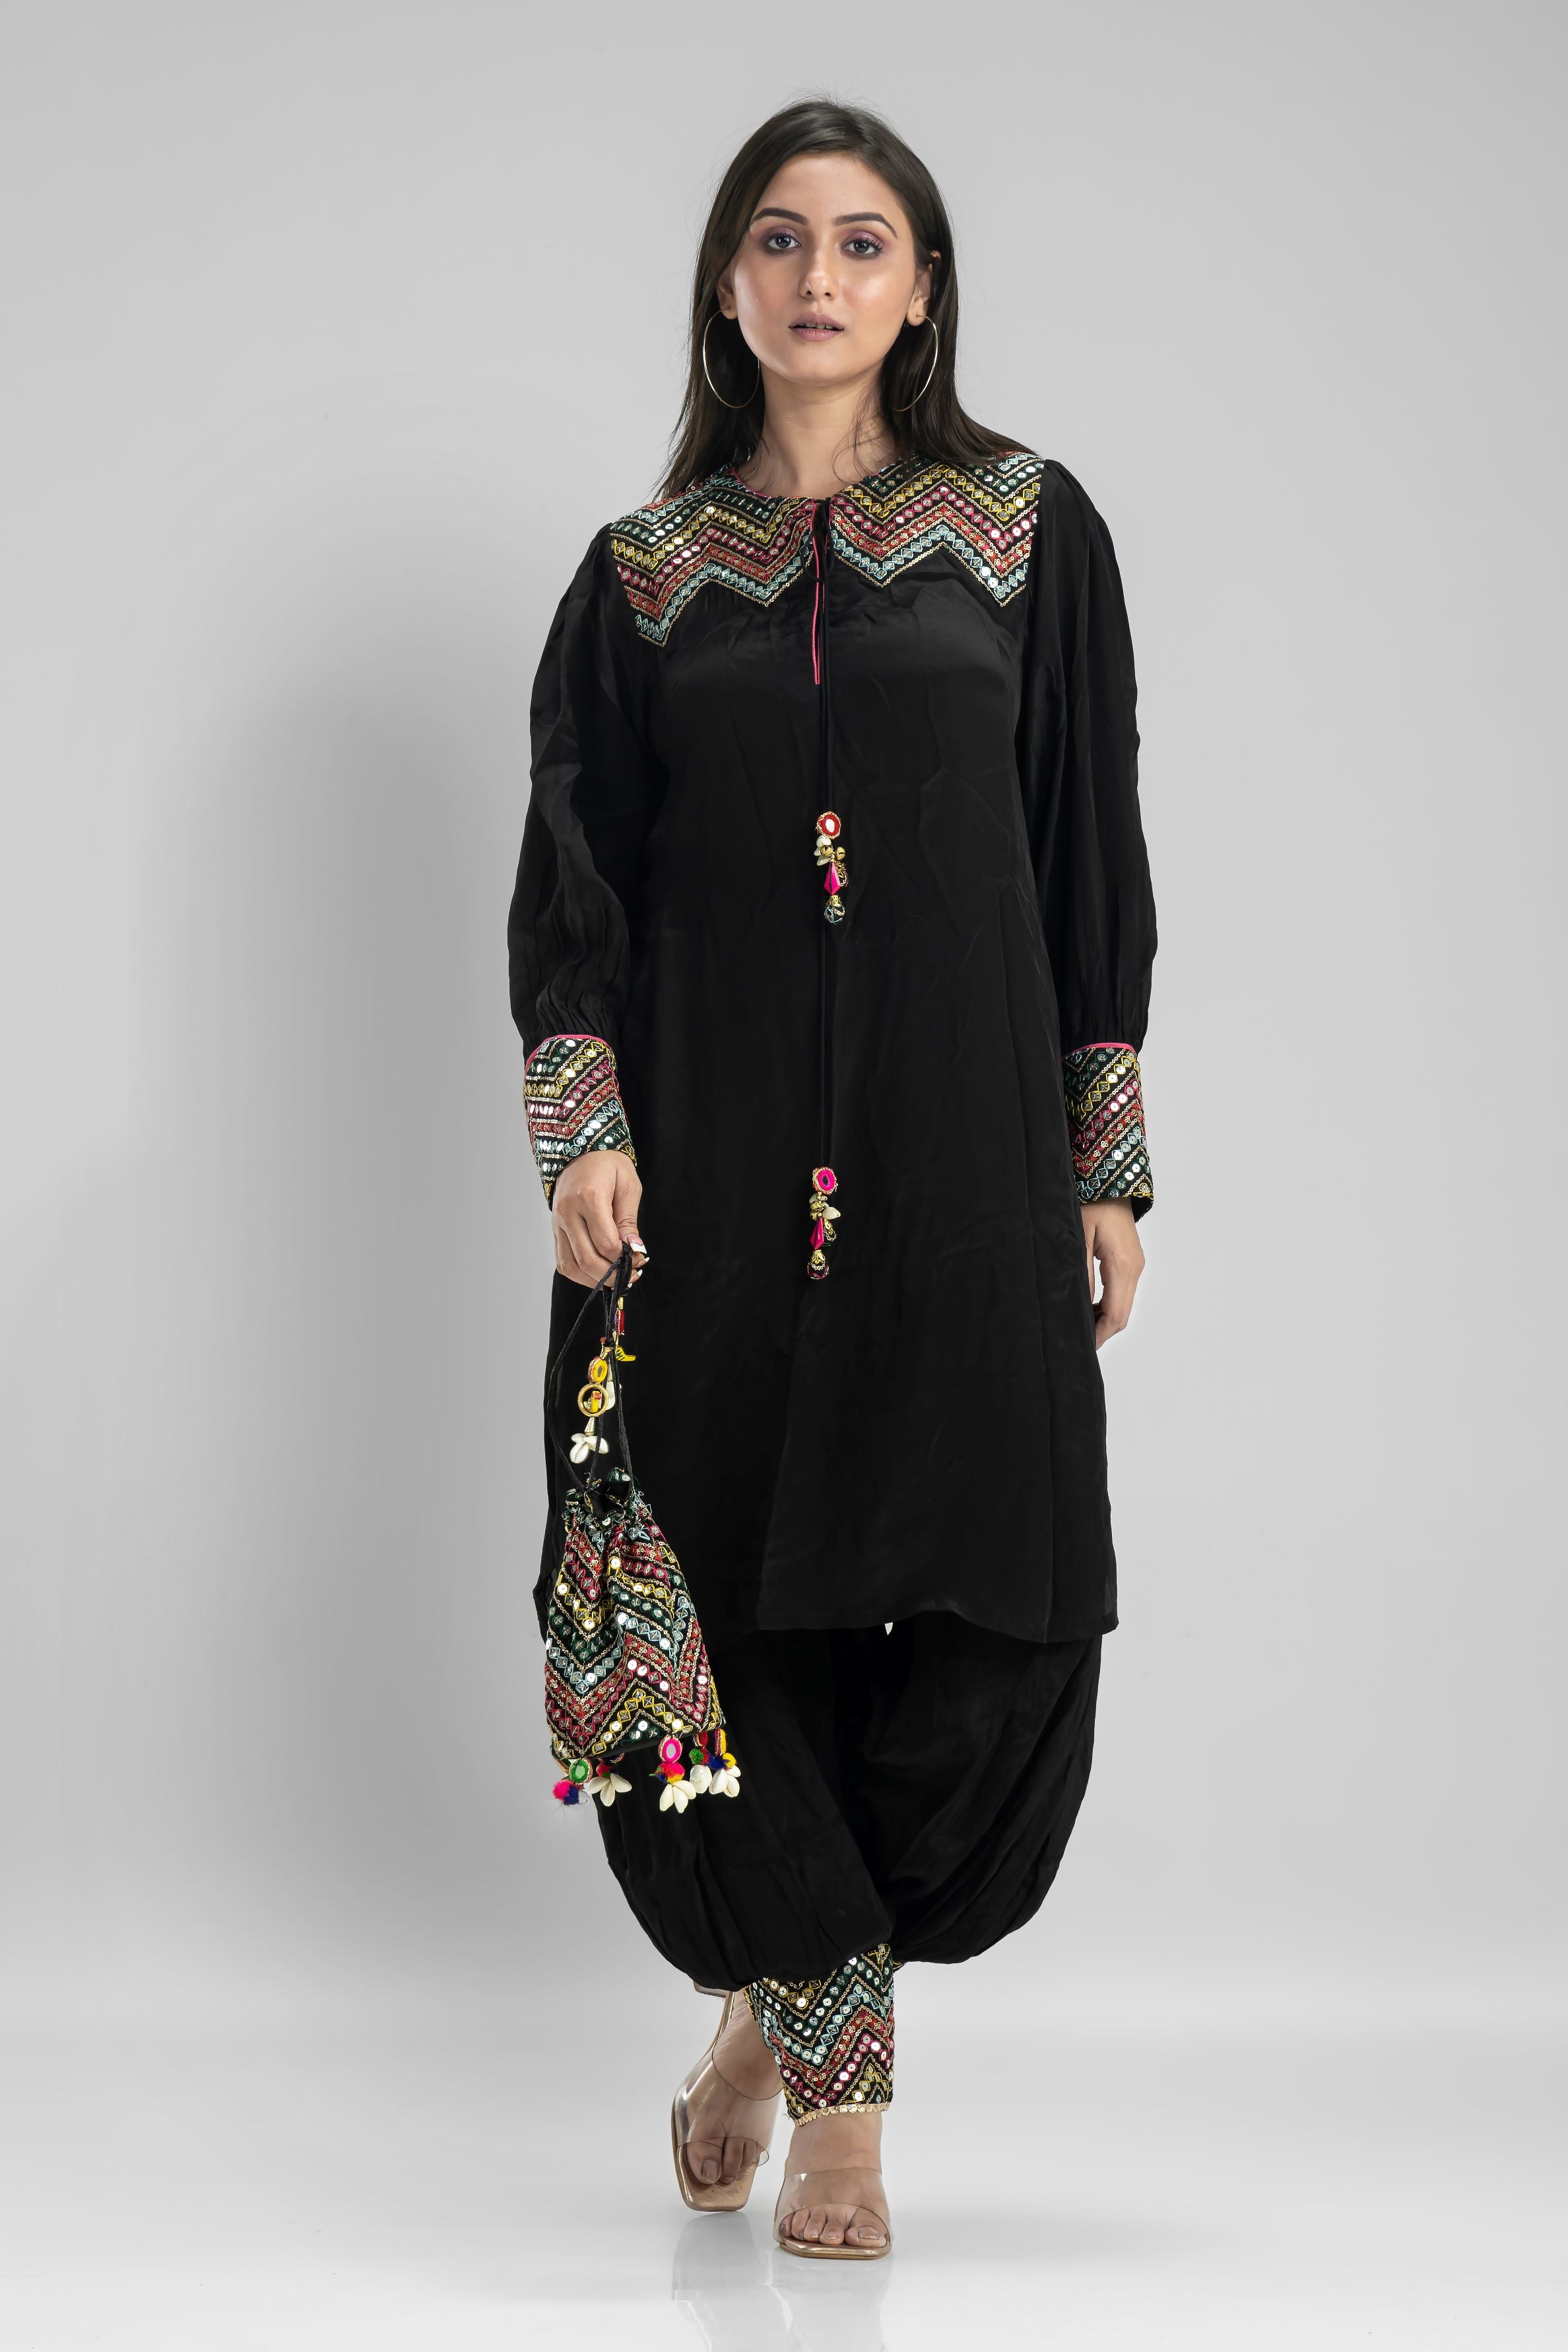 Buy Pistaa's Women's Cotton Short Black Kurta and Maroon Patiala Salwar Set  at Amazon.in